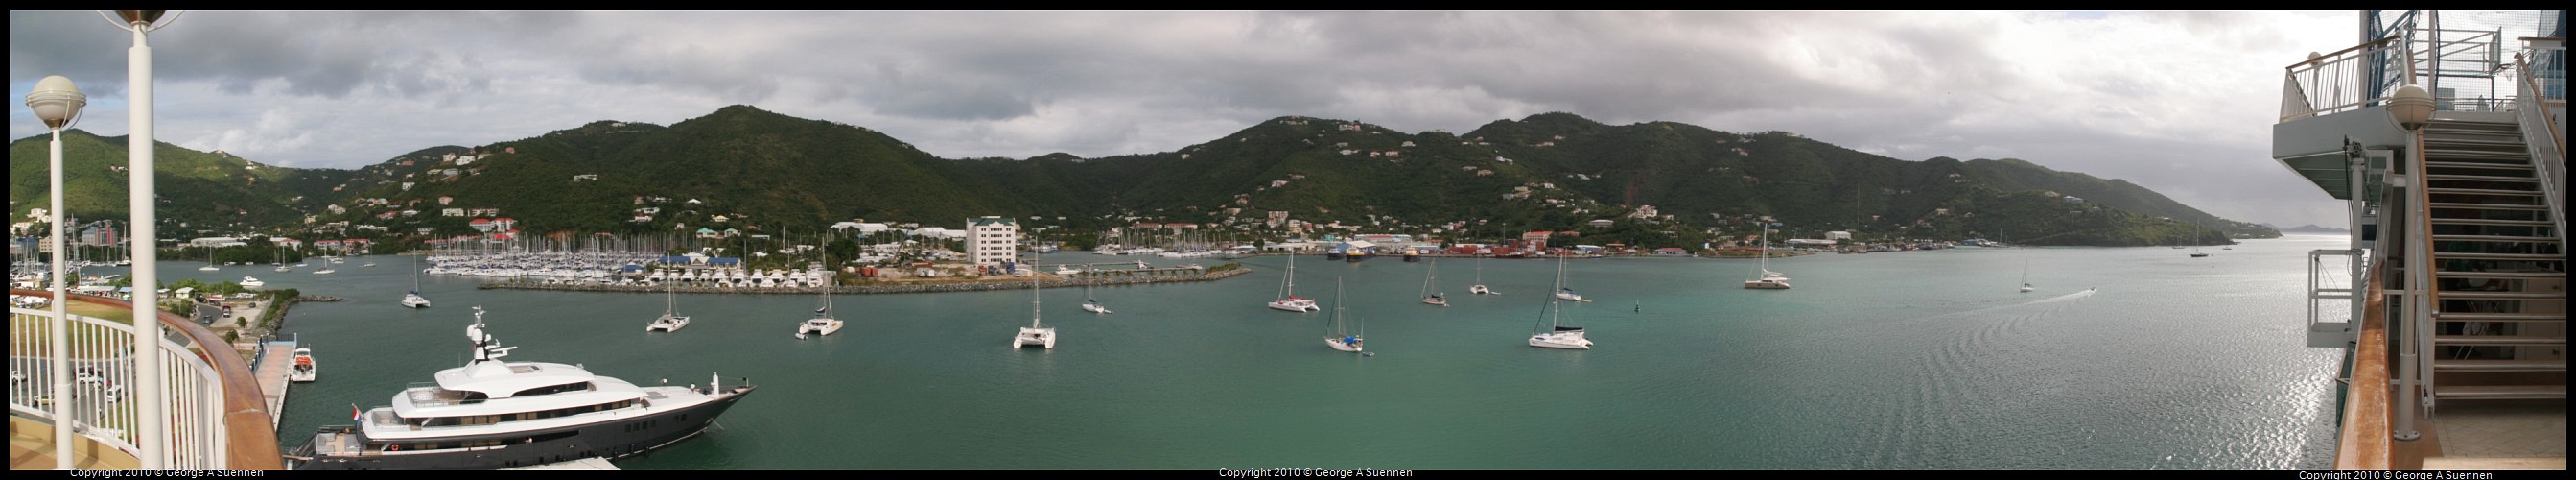 pano-Tortola-2.jpg - Tortola Harbor, BVI